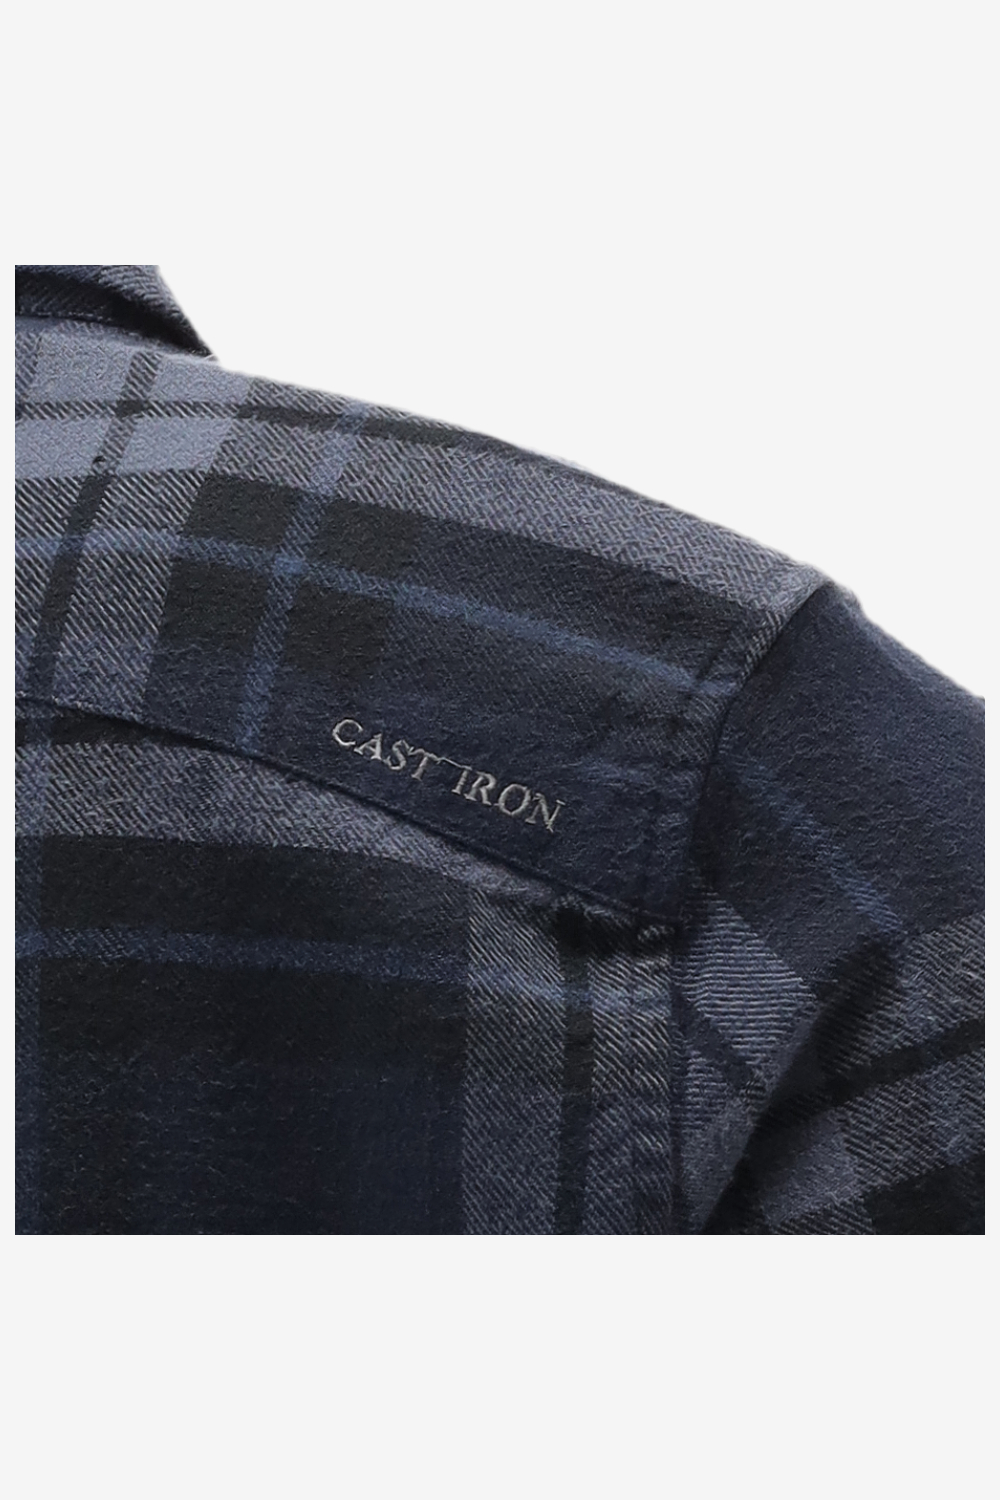 Cast Iron Casual Shirt 